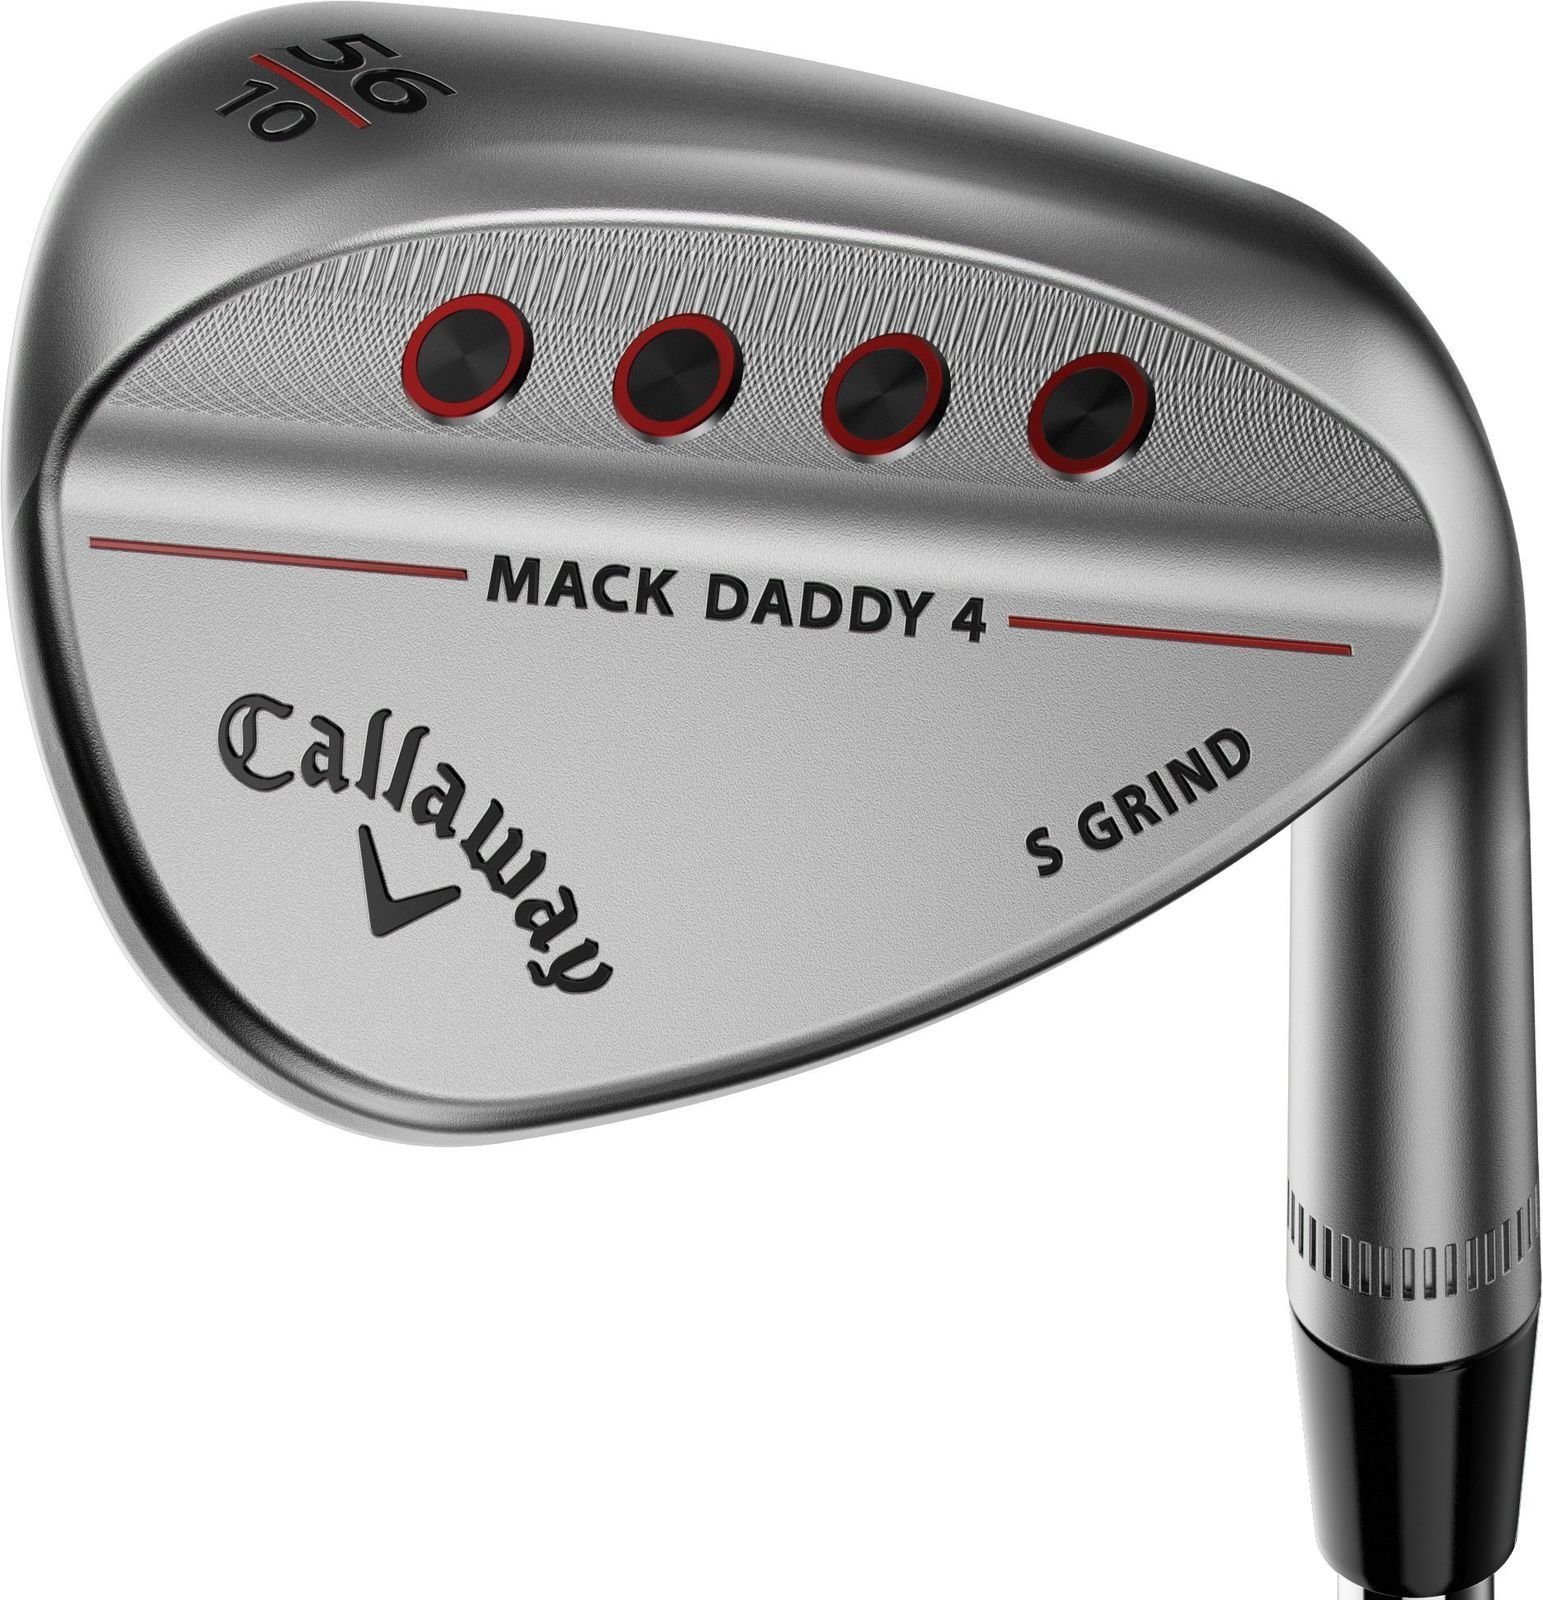 Mazza da golf - wedge Callaway Mack Daddy 4 Chrome Wedge 56-10 S-Grind mancino